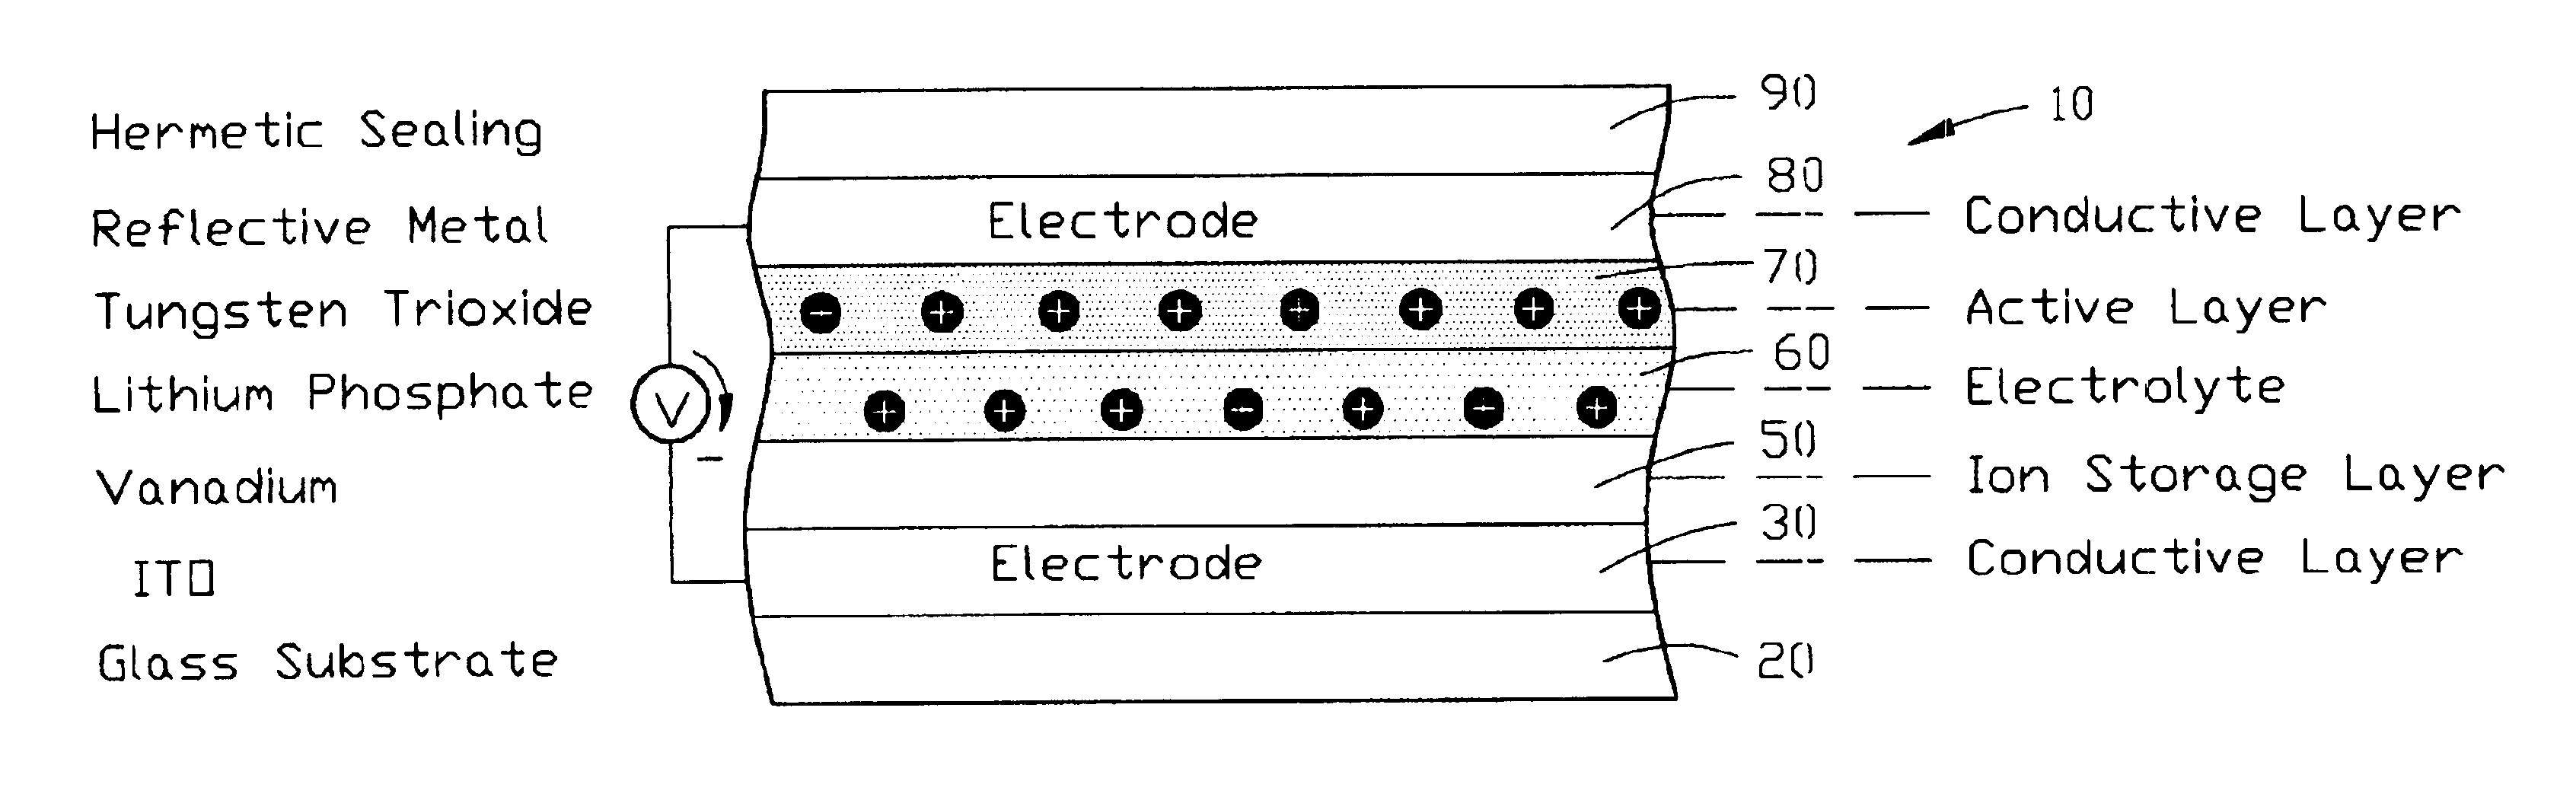 Electrochromic layer